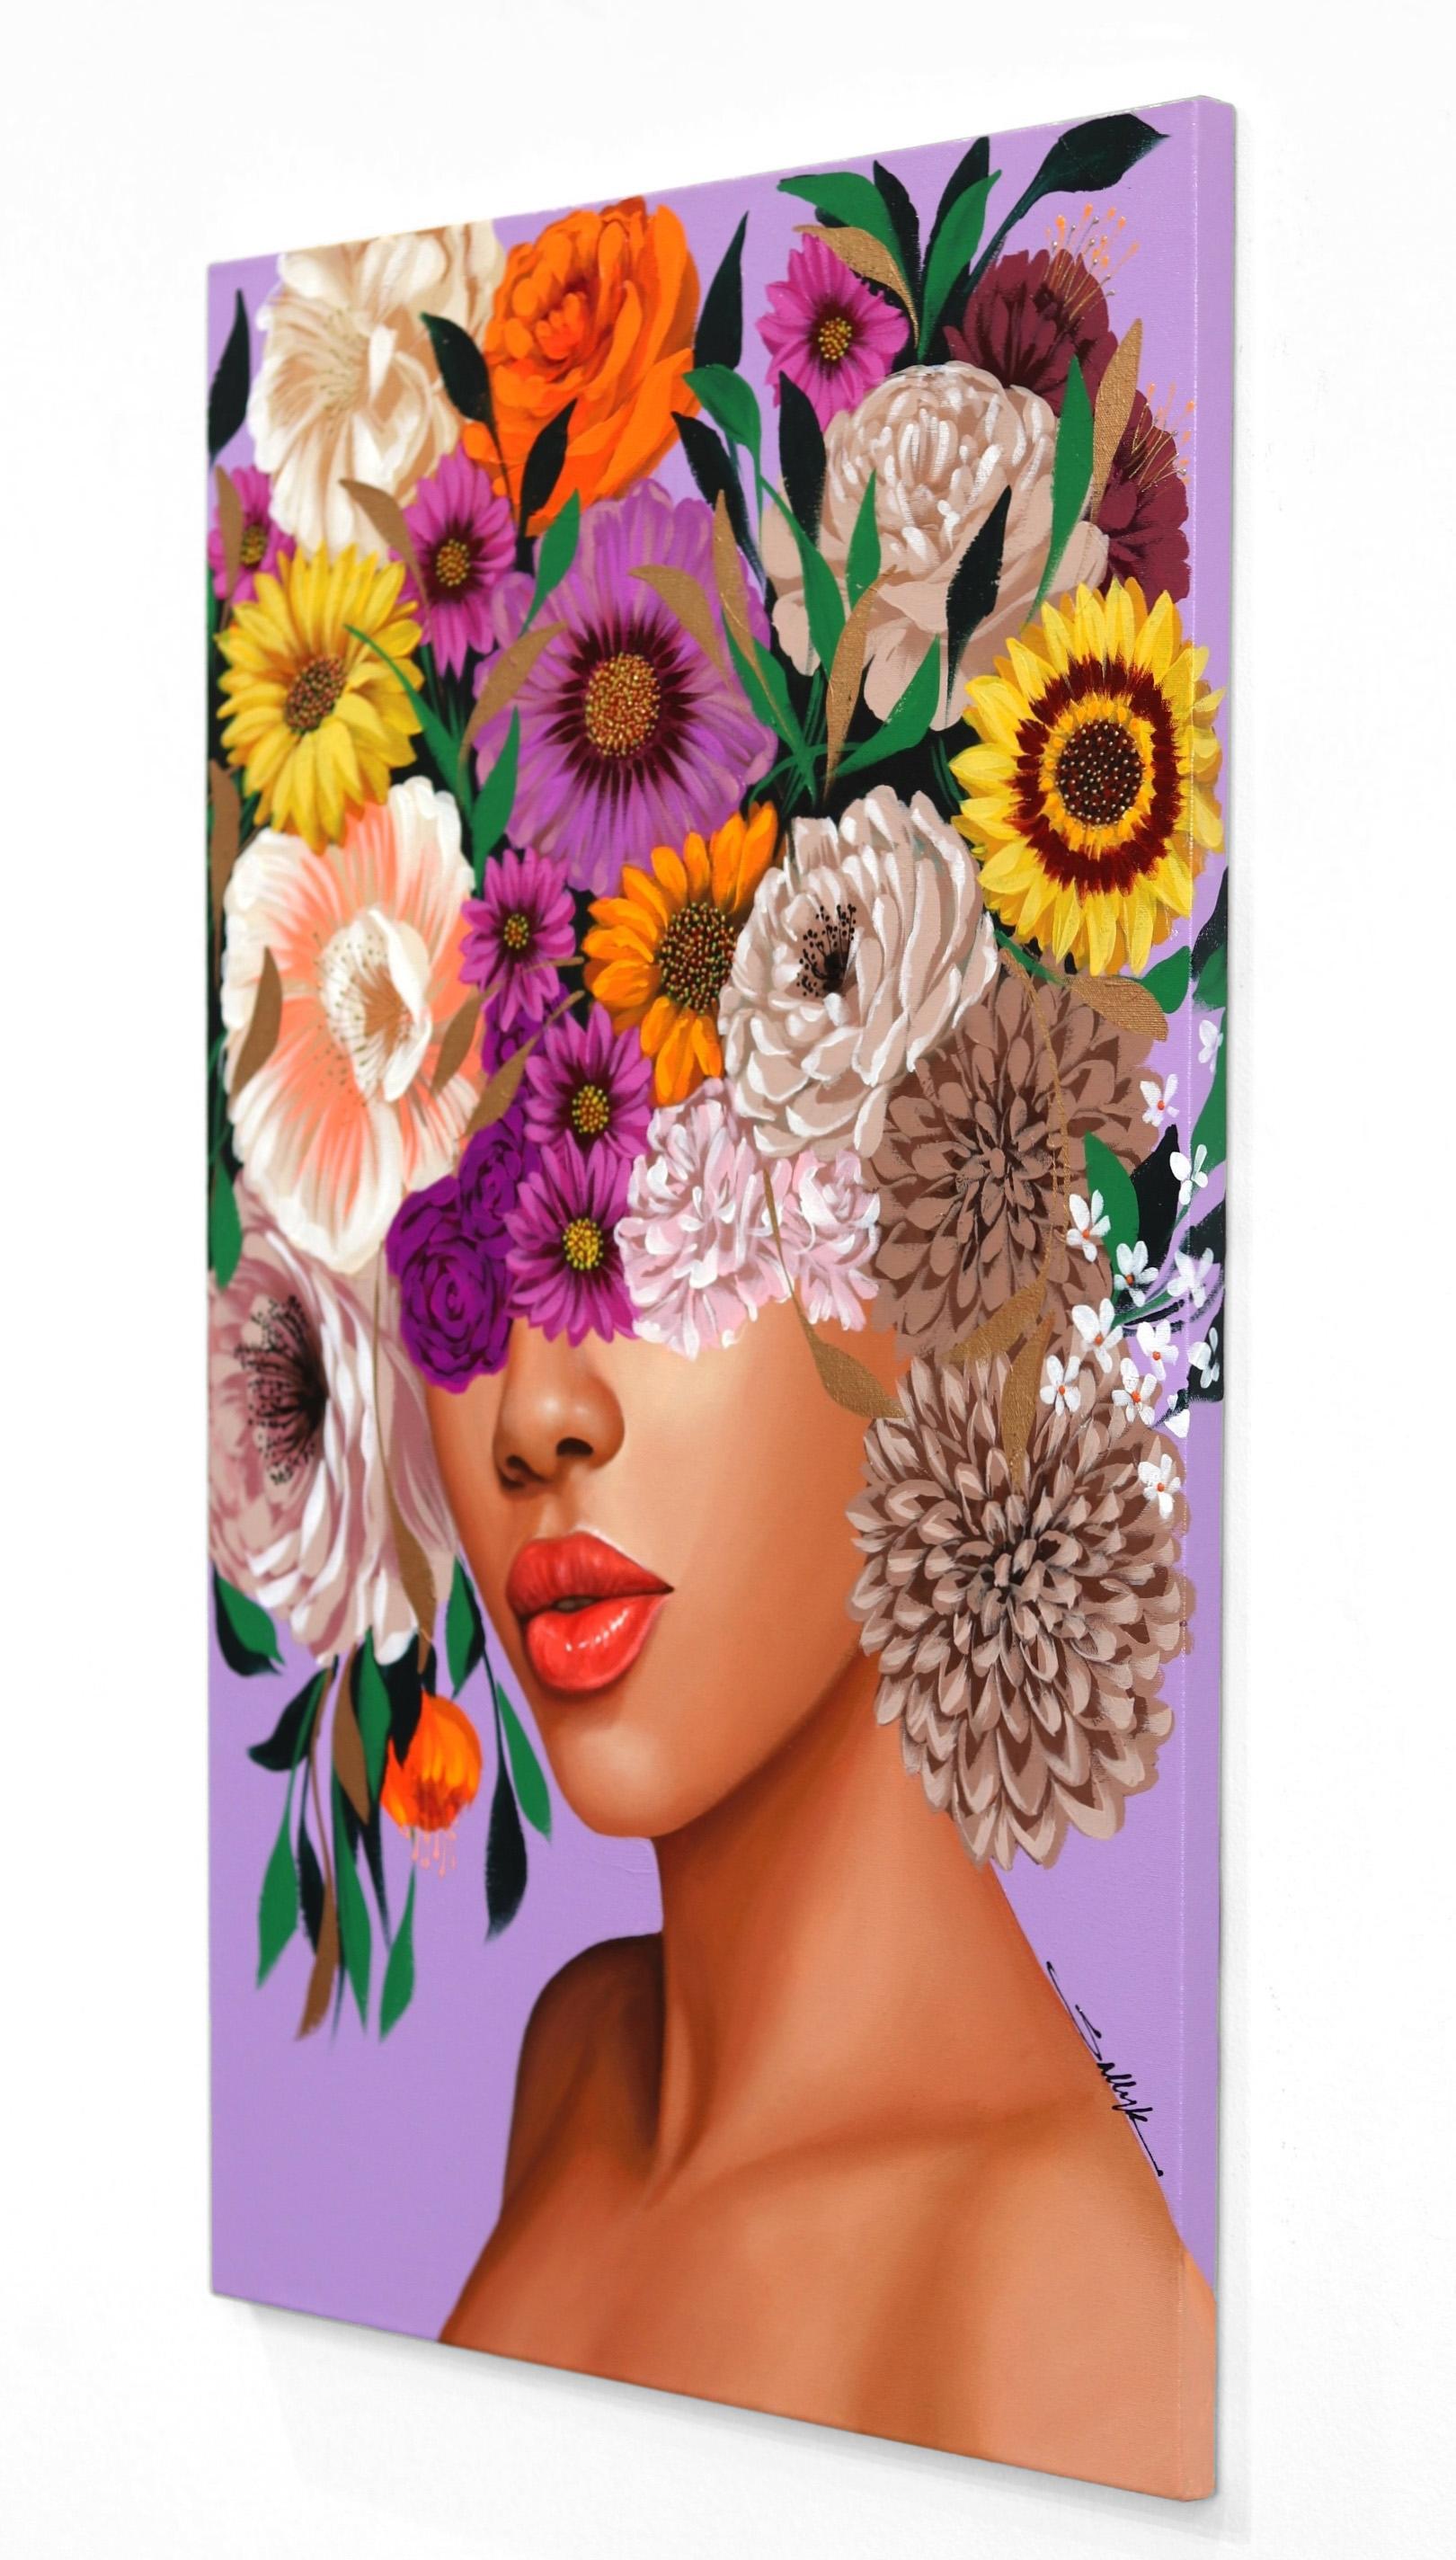 Violet - Original Colorful Sally K Figurative Pop Art Floral Painting on Canvas 1